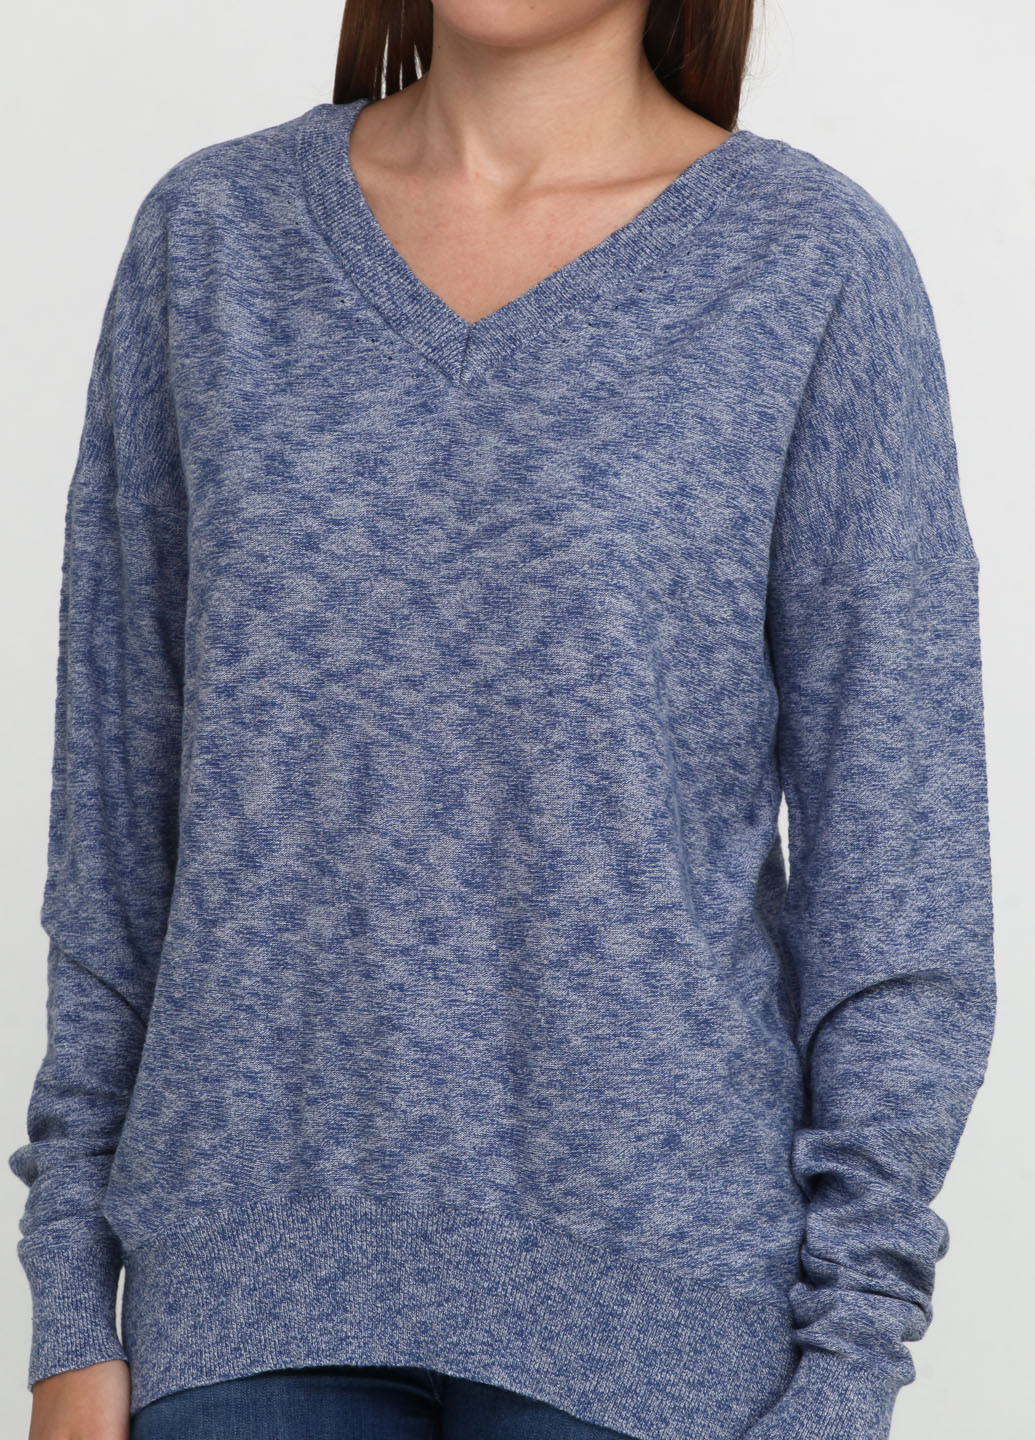 Темно-голубой демисезонный пуловер пуловер Sirup